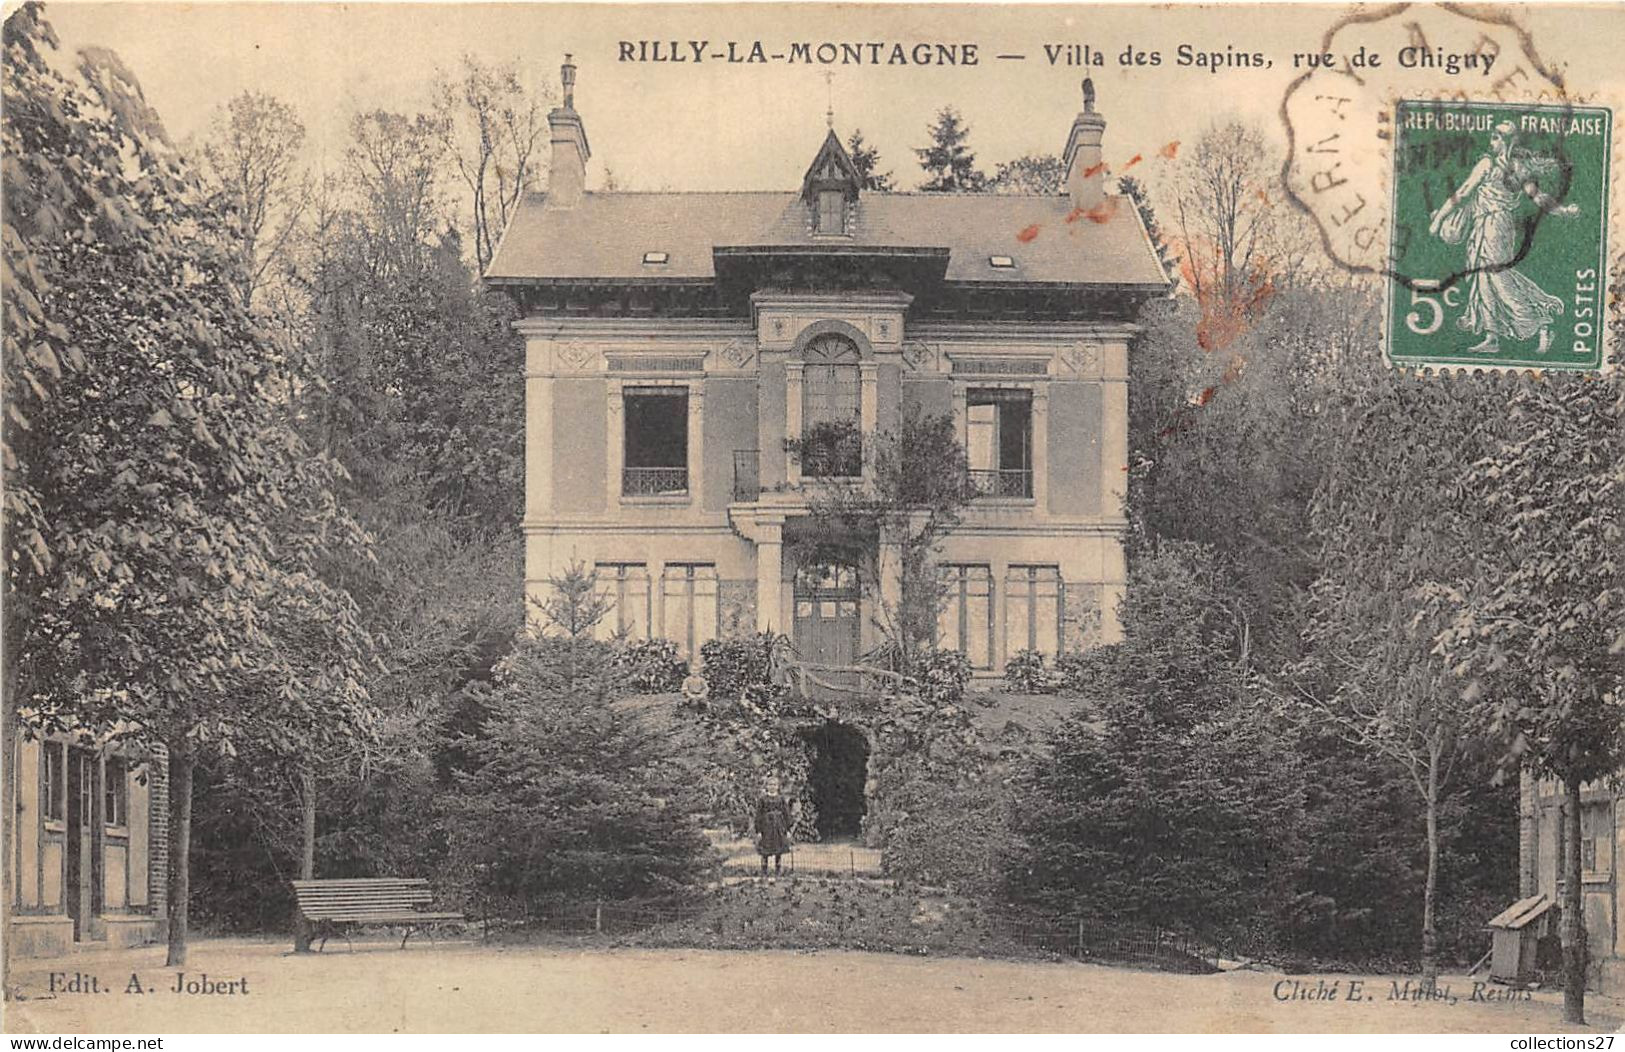 51-RILLY-LA-MONTAGNE- VILLA DES SAPINS RUE DE CHIGNY - Rilly-la-Montagne